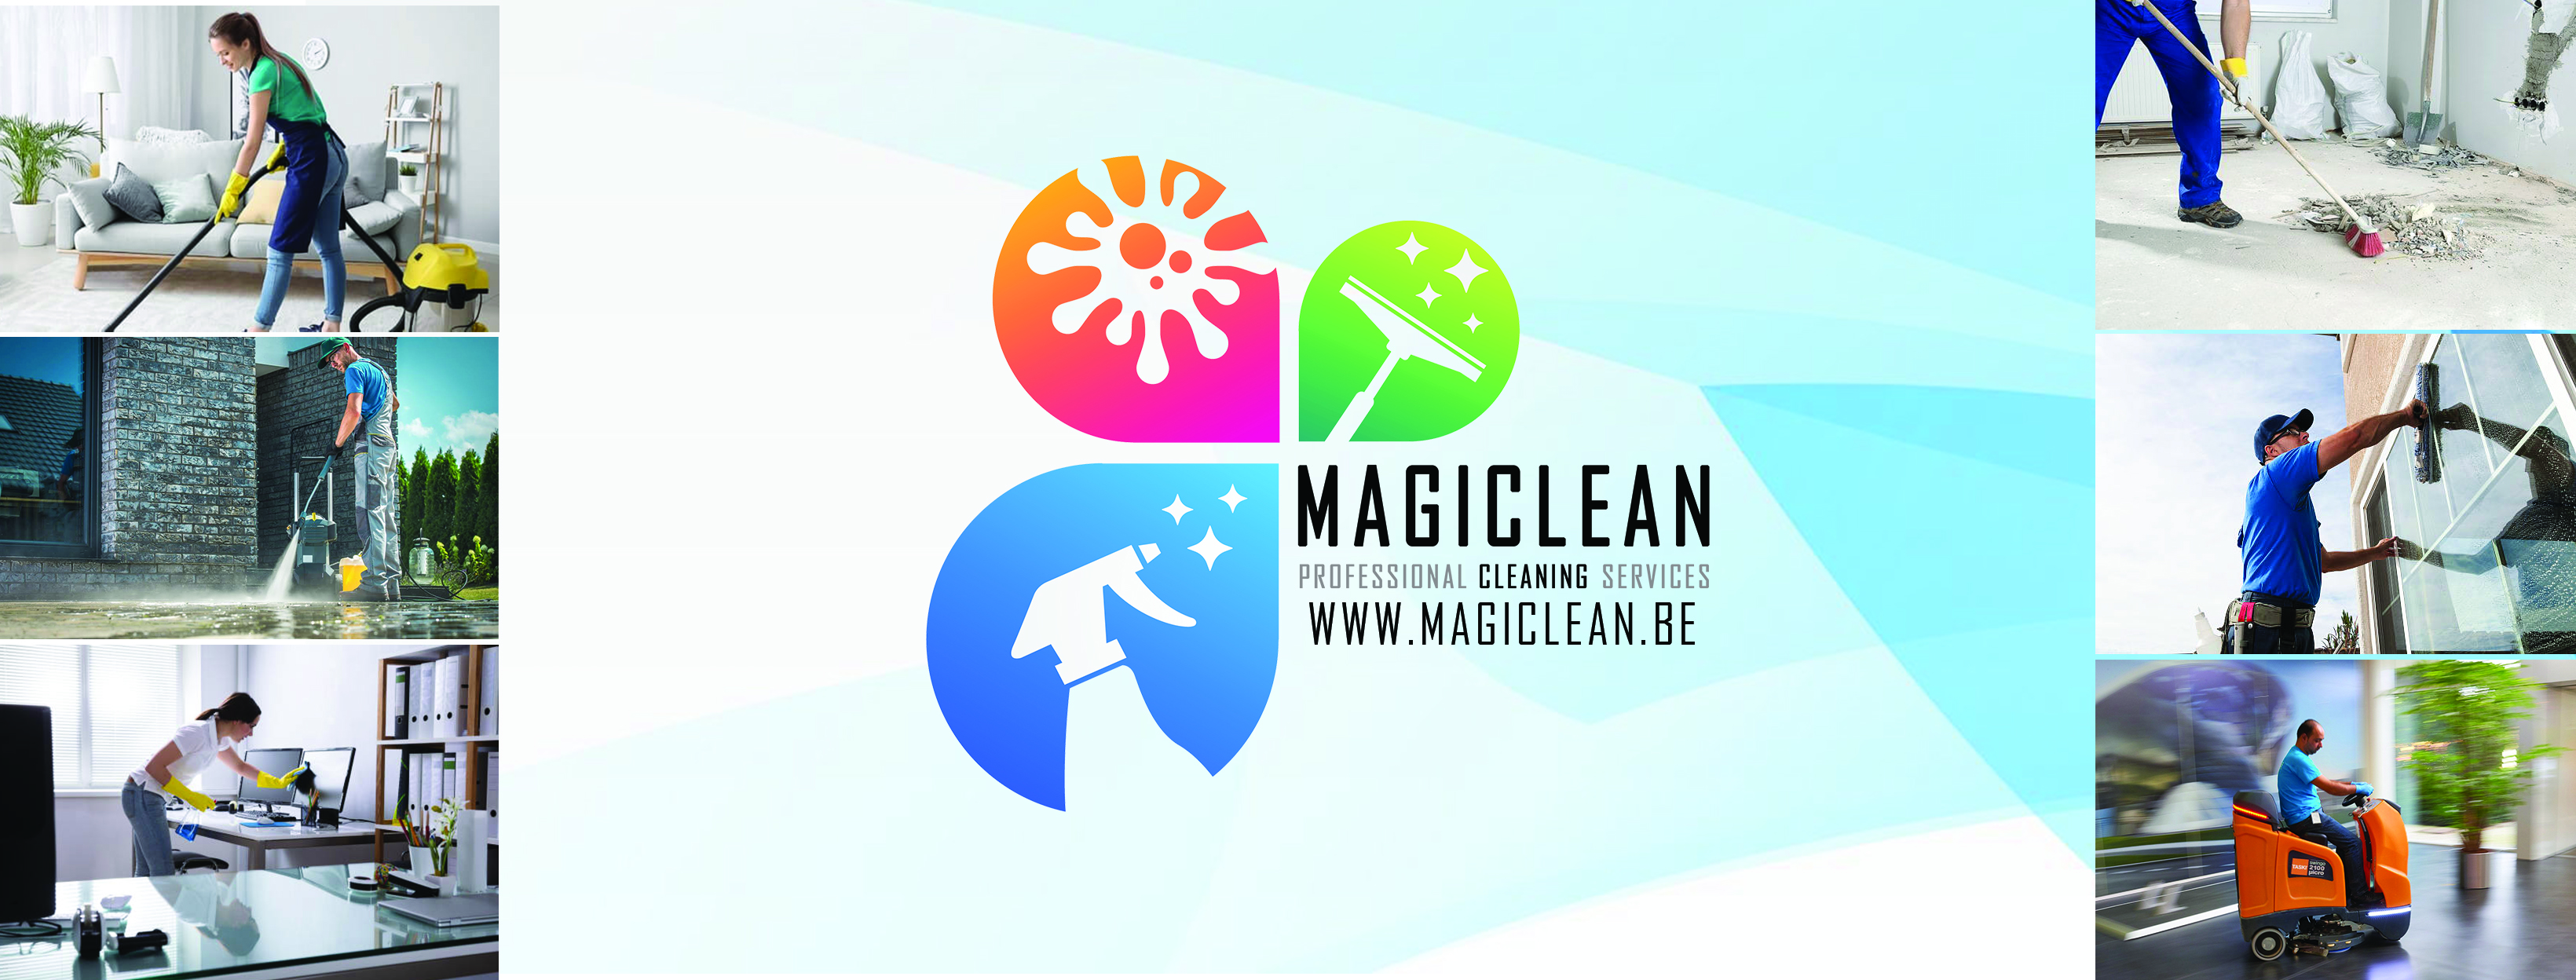 schoonmaakbedrijven Melsele Magiclean - Professional Cleaning Services